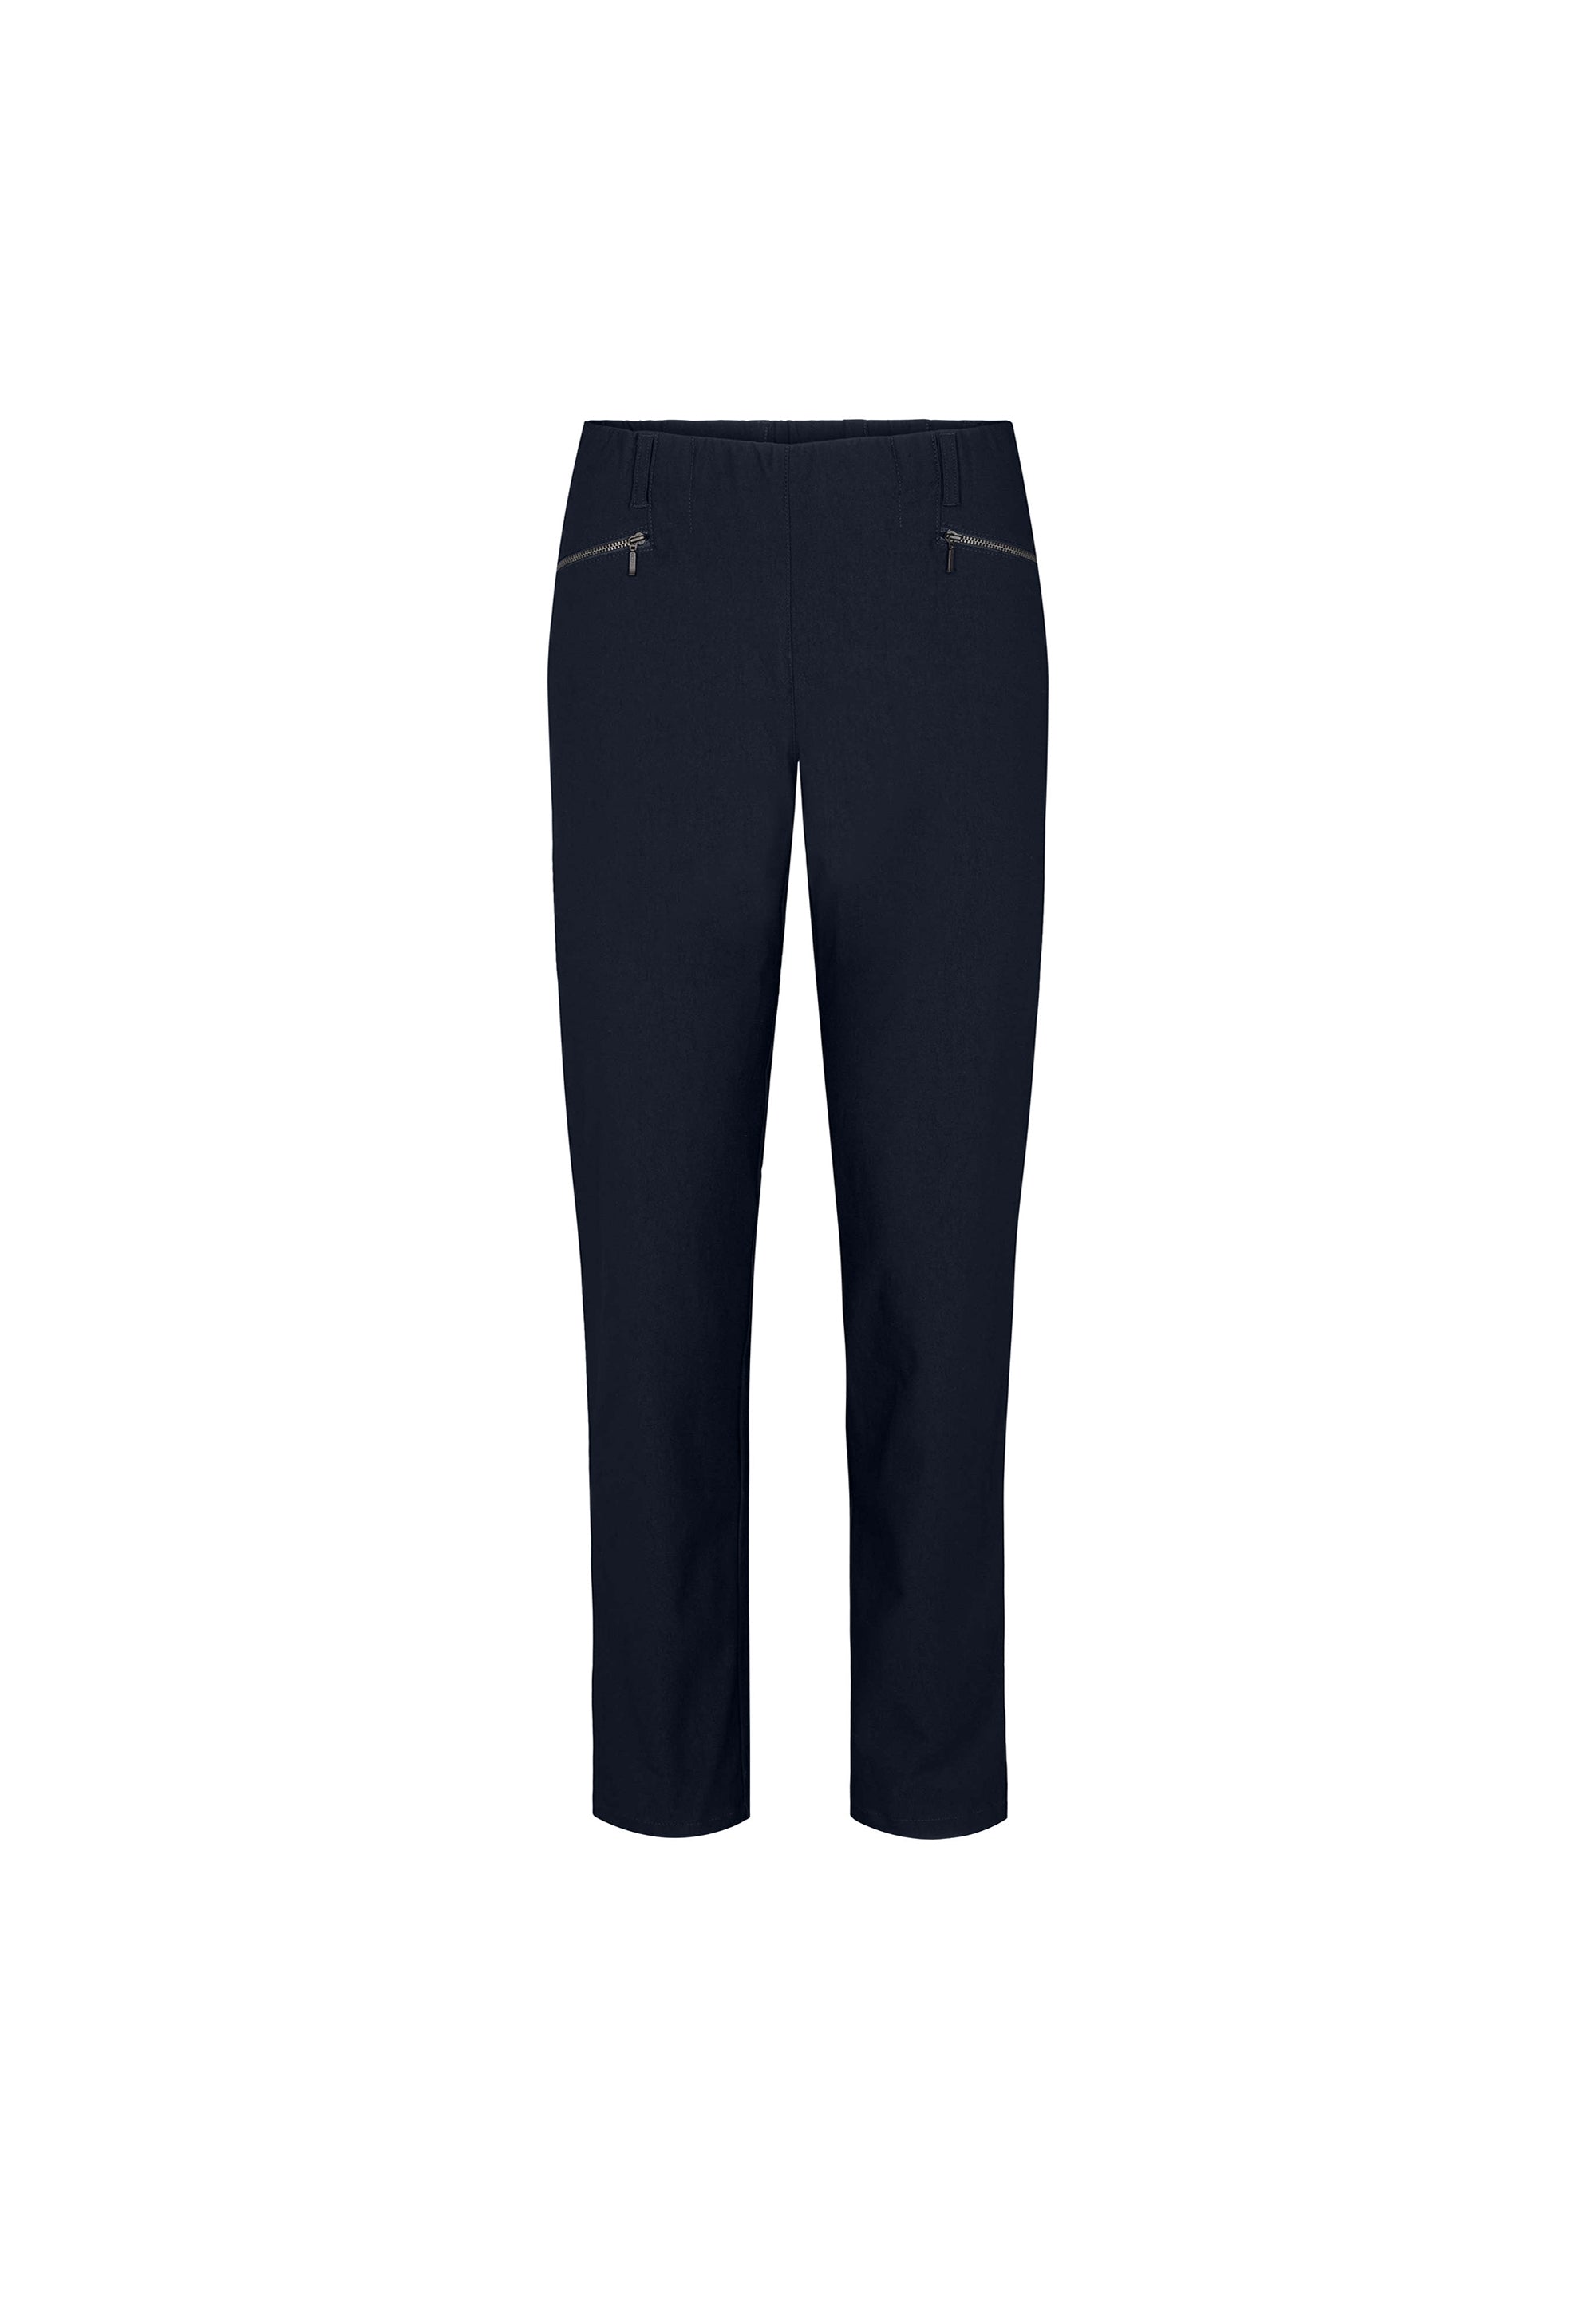 LAURIE Rylie Pocket Regular - Medium Length Trousers REGULAR Schwarz gebürstet